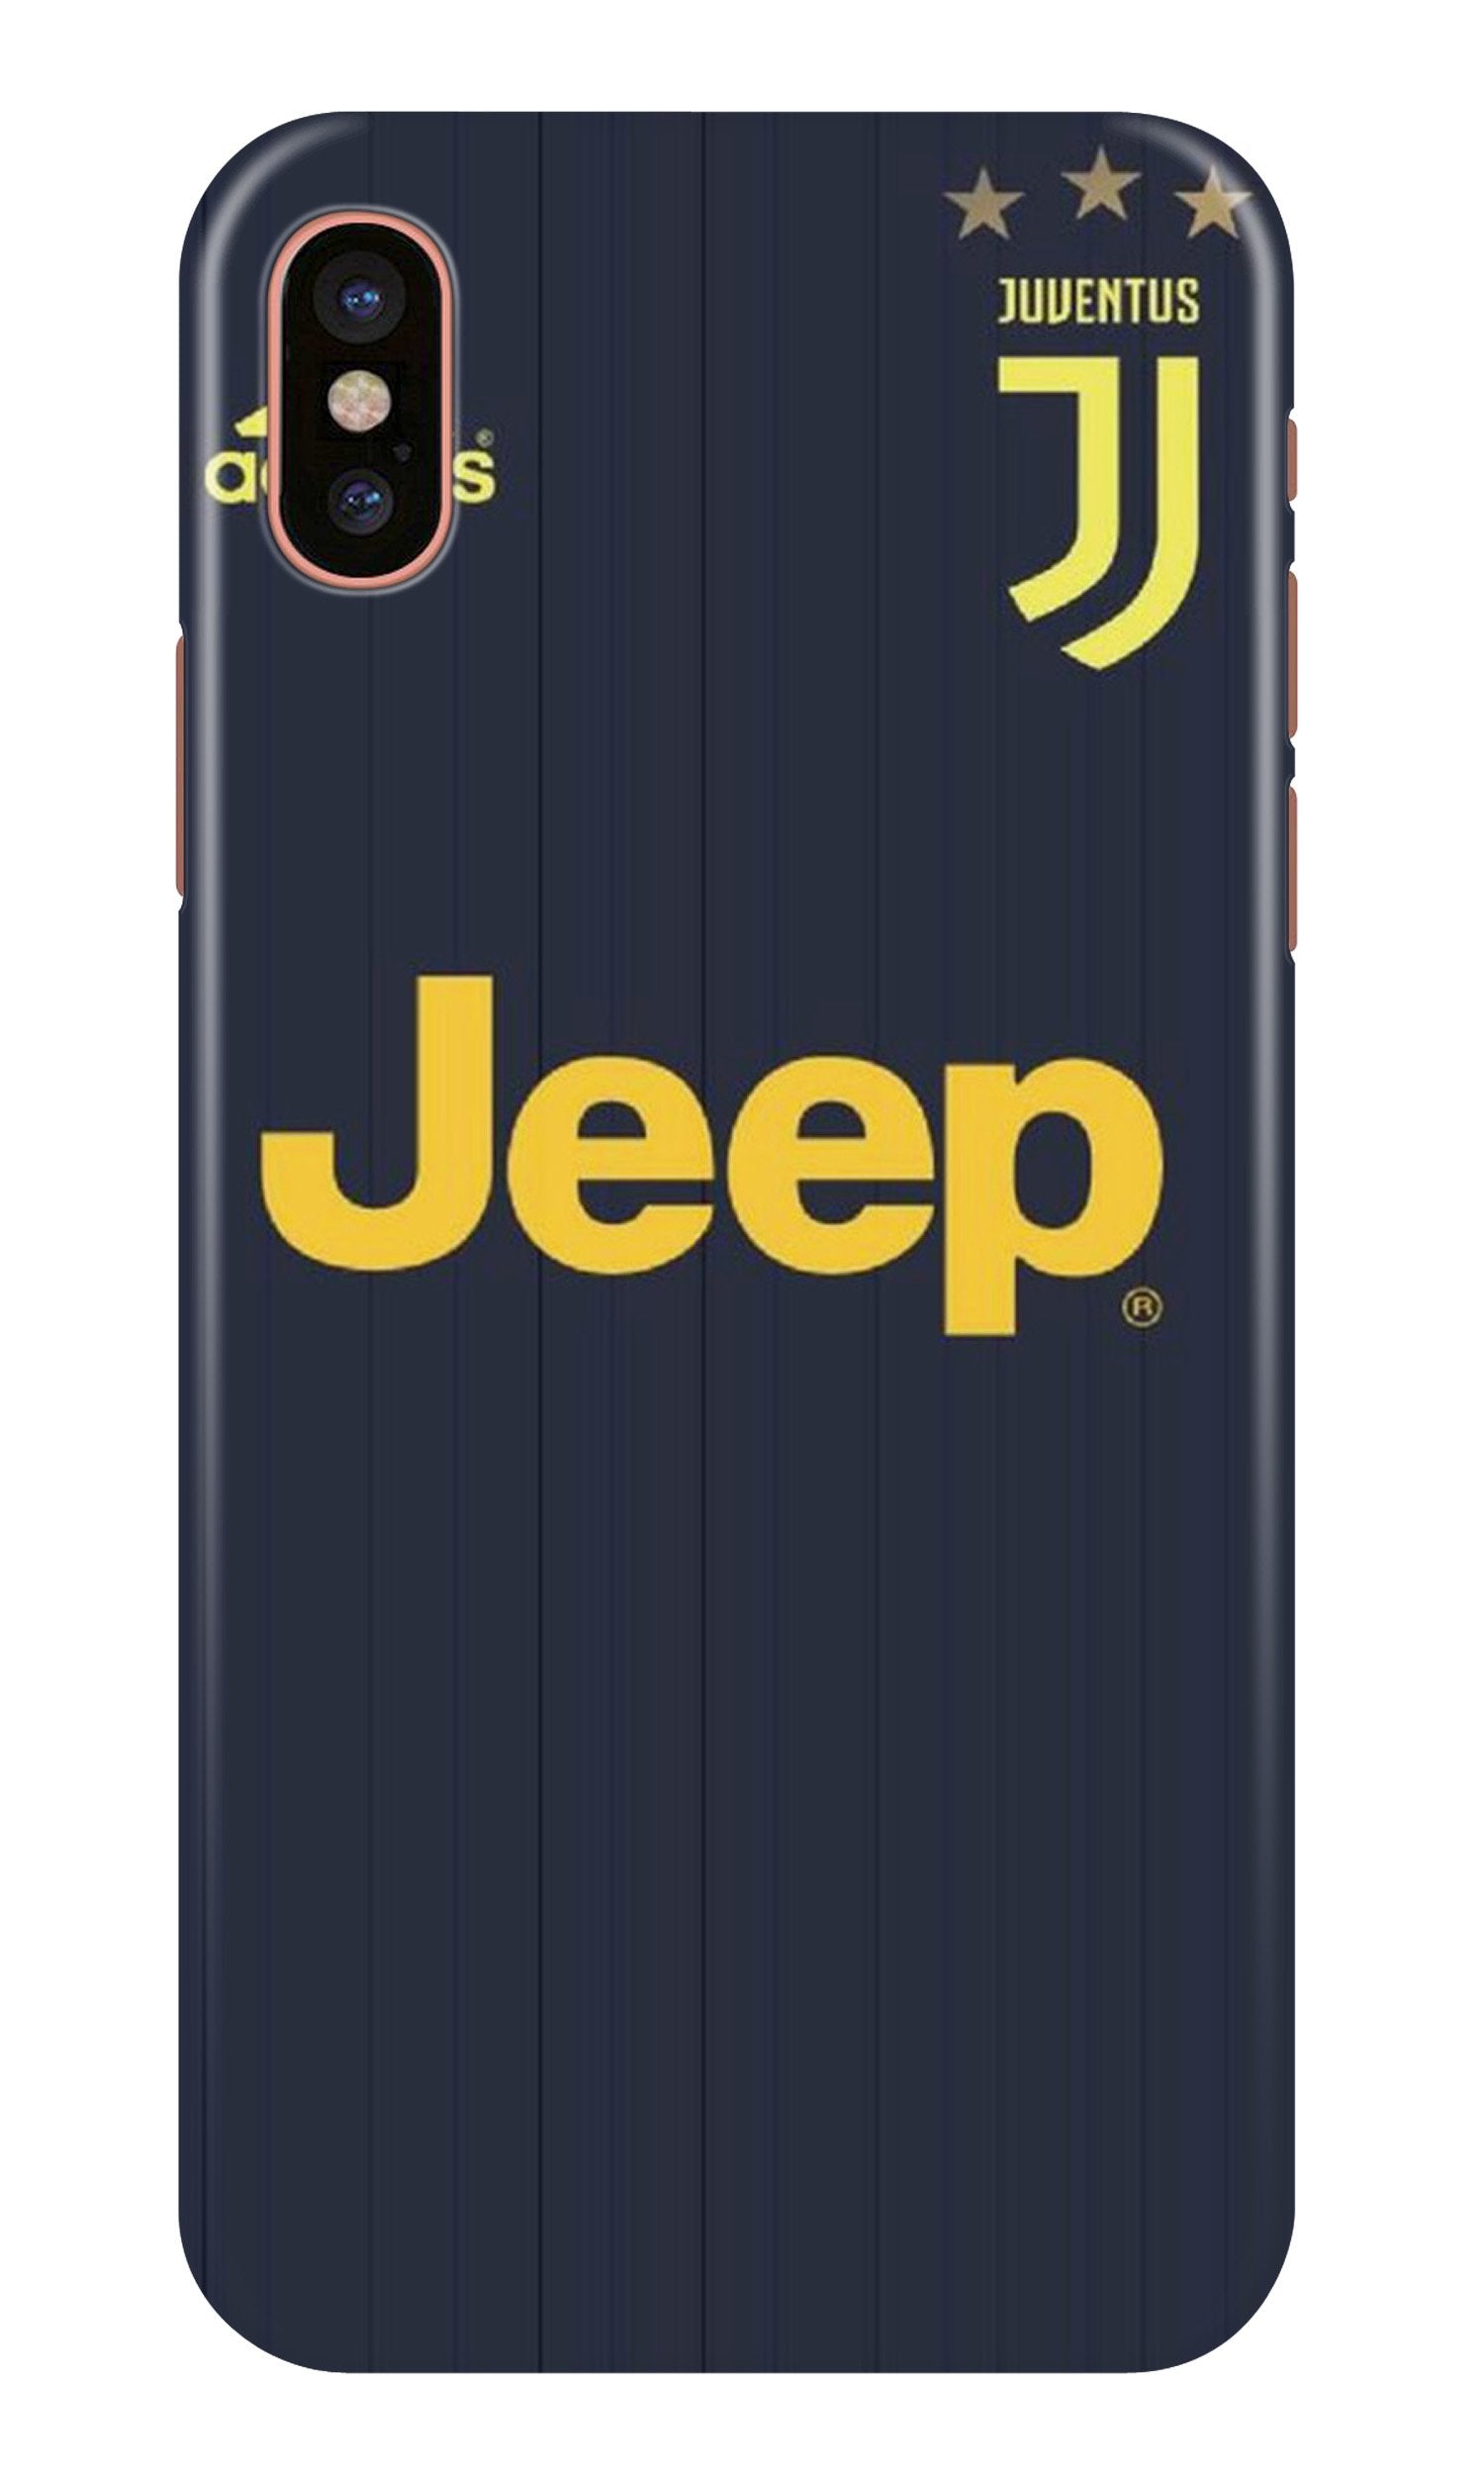 Jeep Juventus Case for iPhone X(Design - 161)